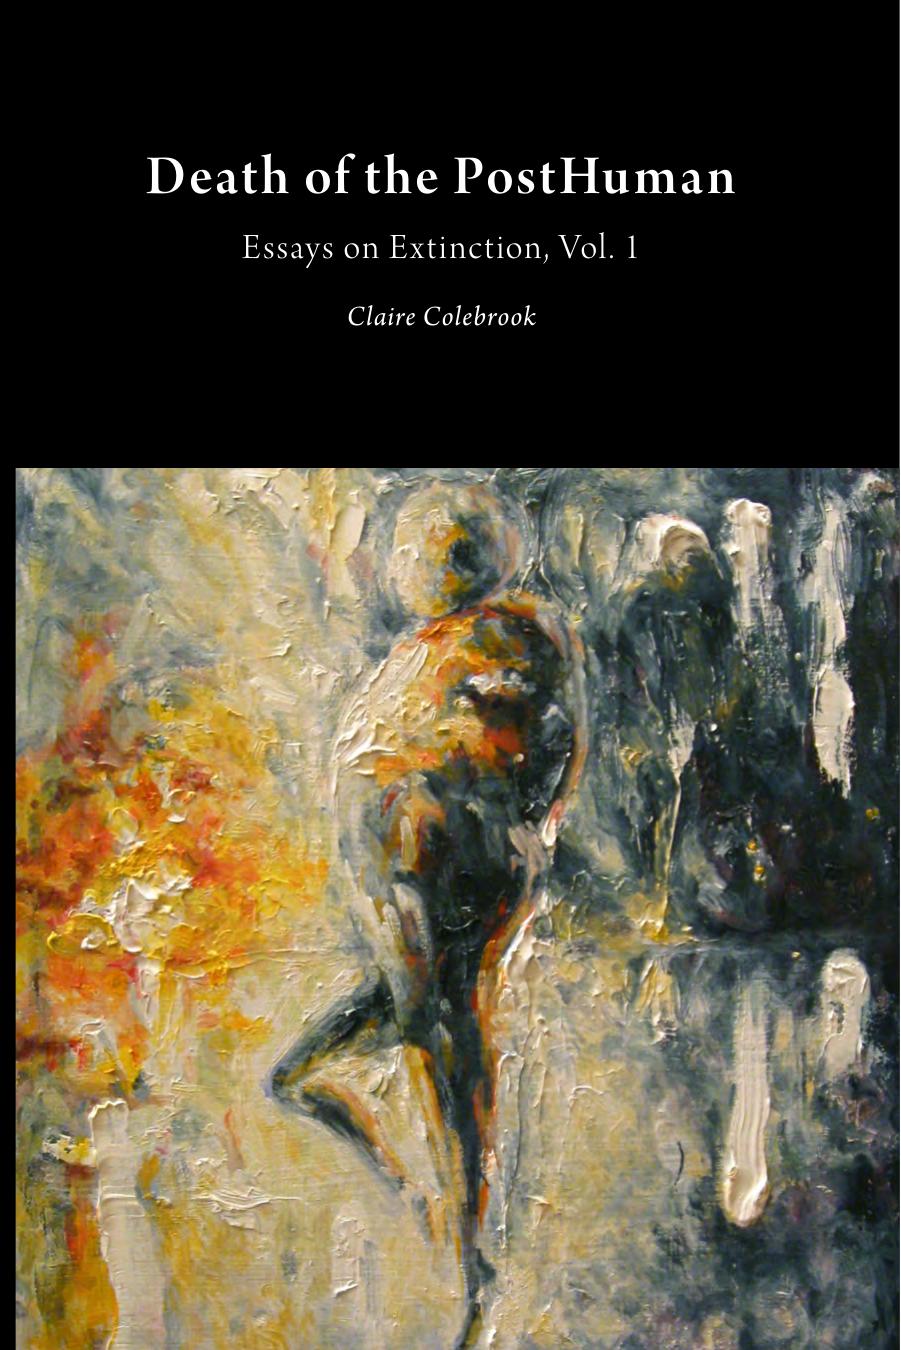 Essays on Extinction: Death of the Posthuman